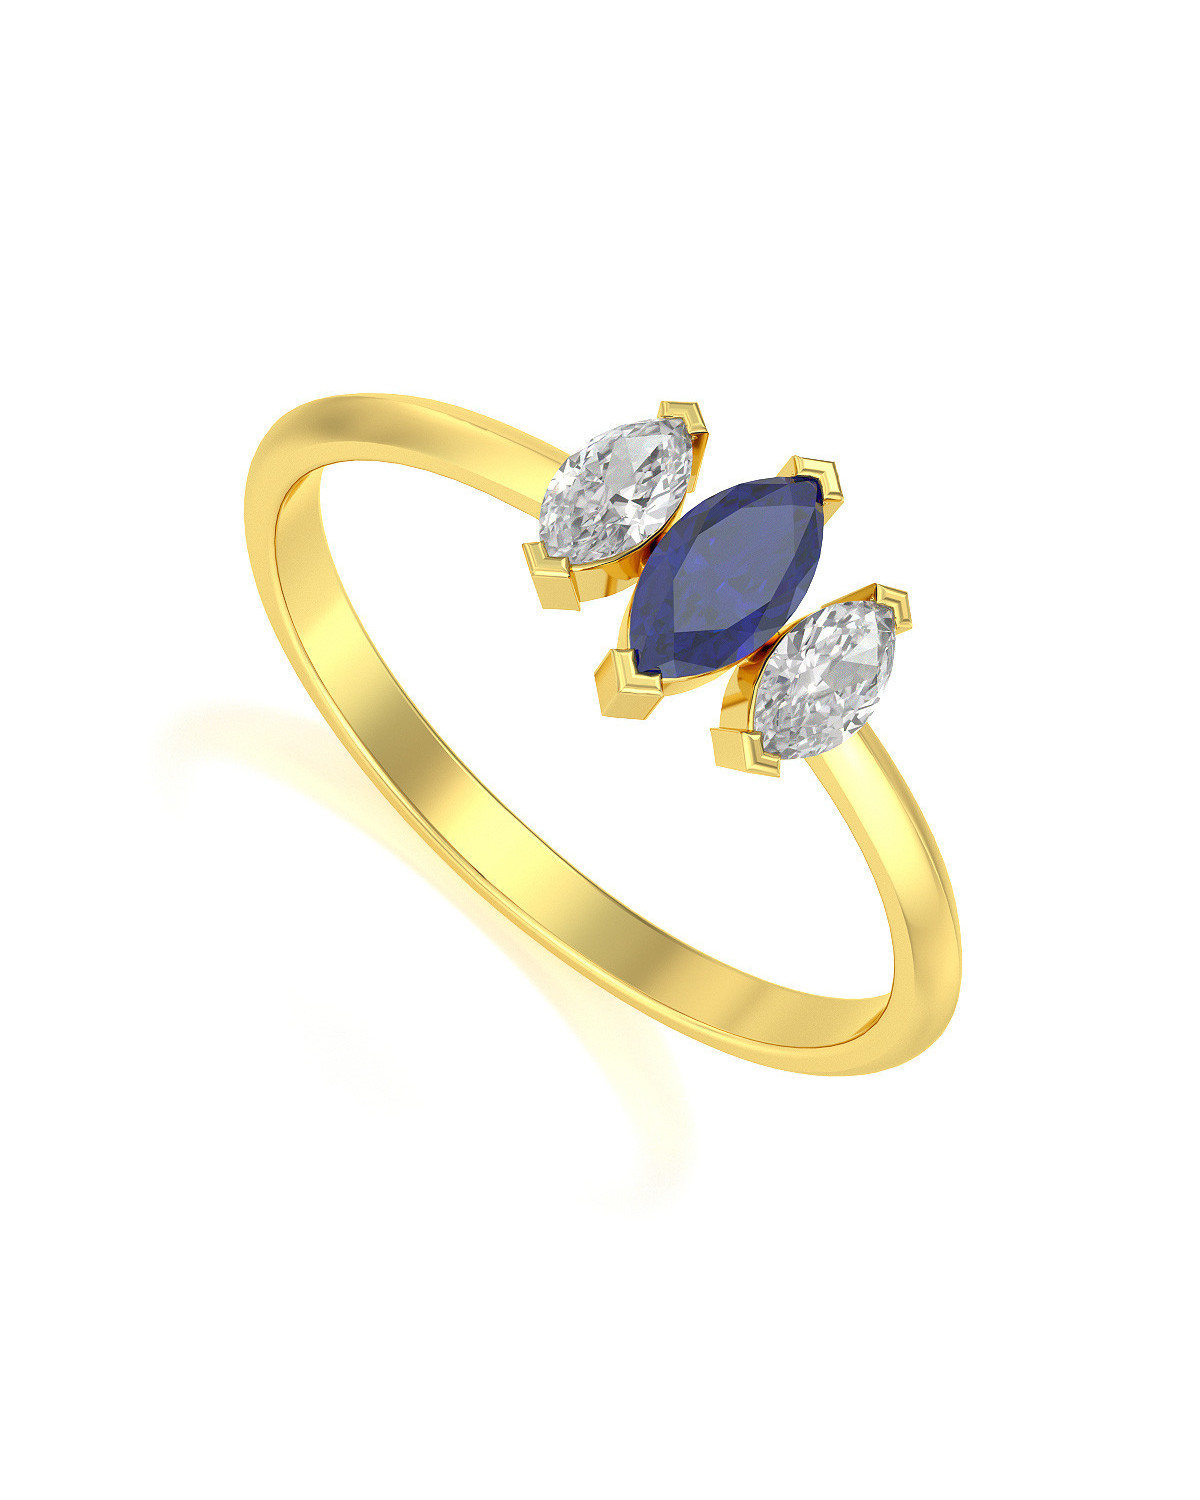 Gold Sapphire Diamonds Ring